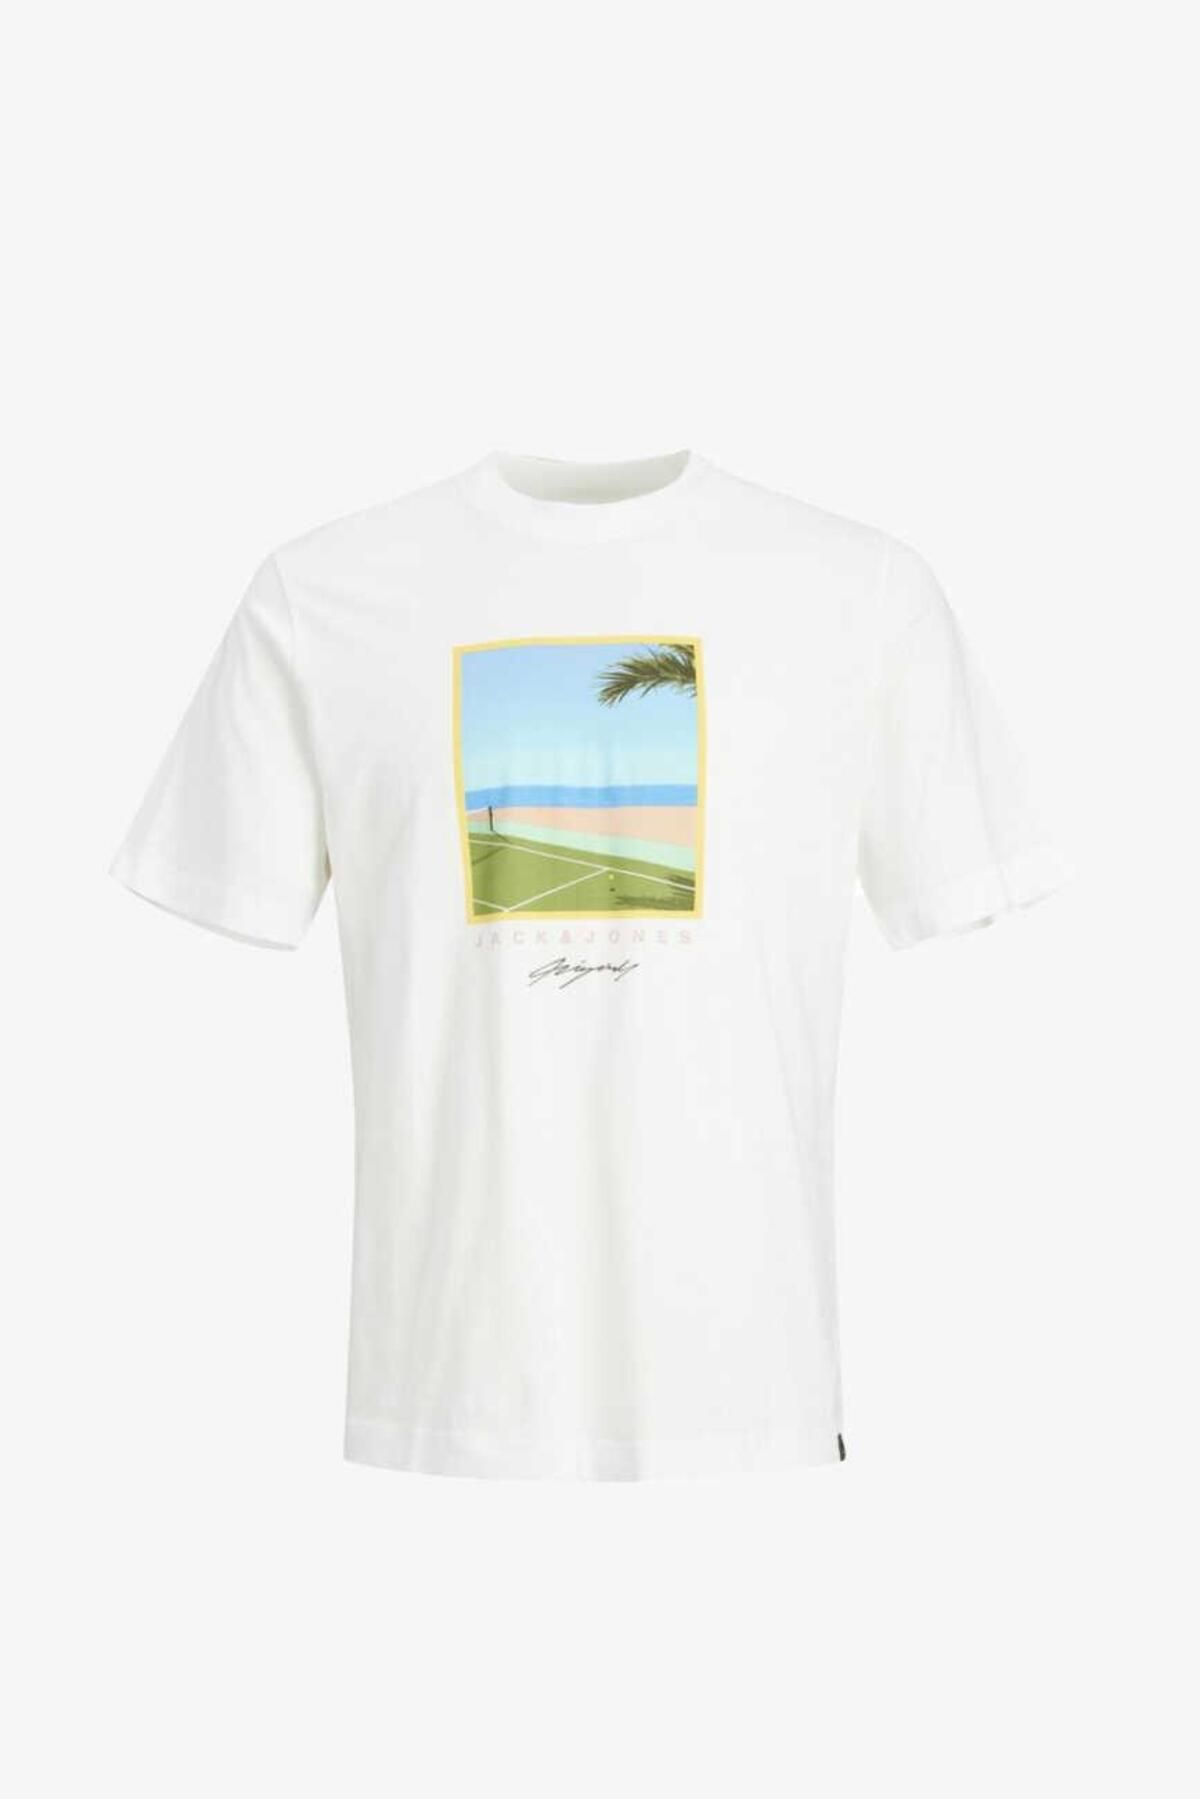 Jack & Jones Jortulum Landscape Tee Ss Crew Neck Beyaz Erkek T-shirt 12235226-brigh